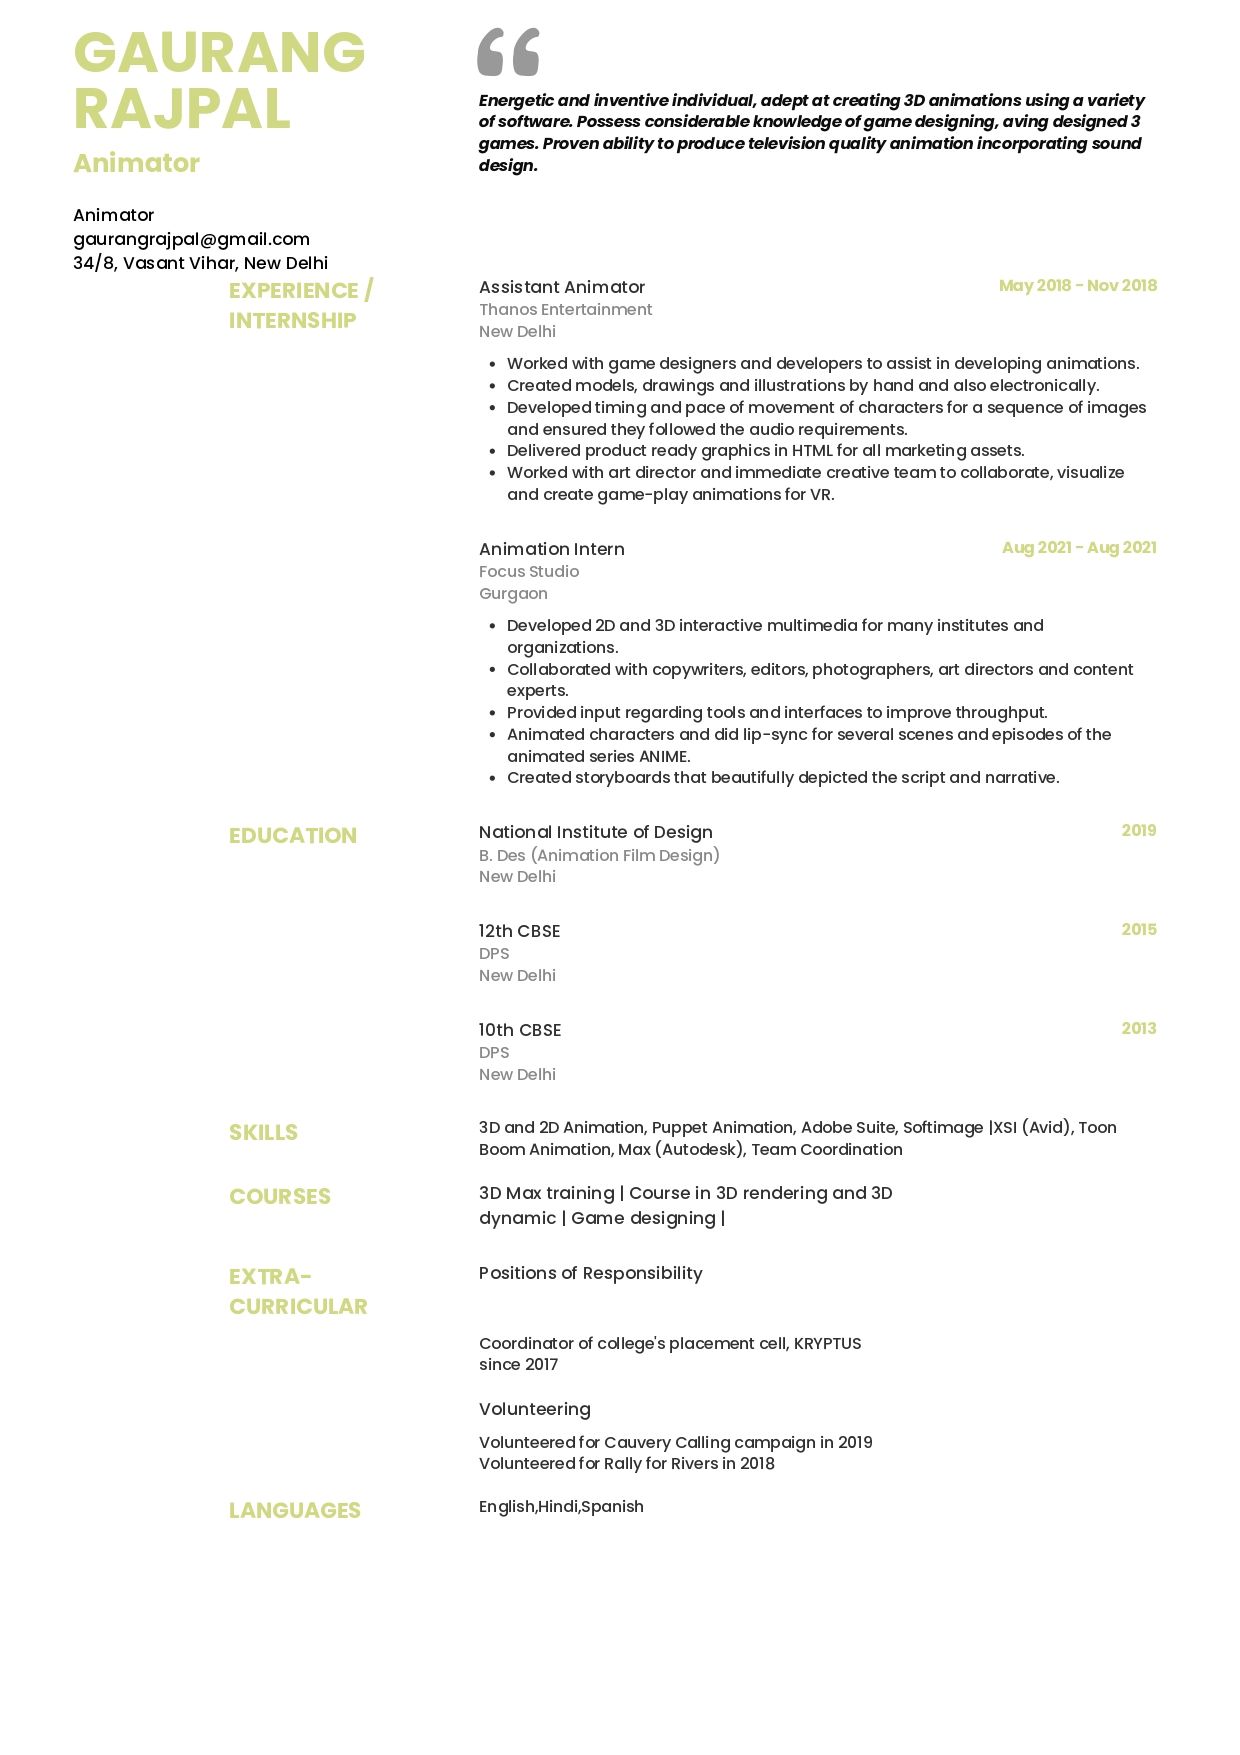 Animator's Resume built using Resumod's resume builder